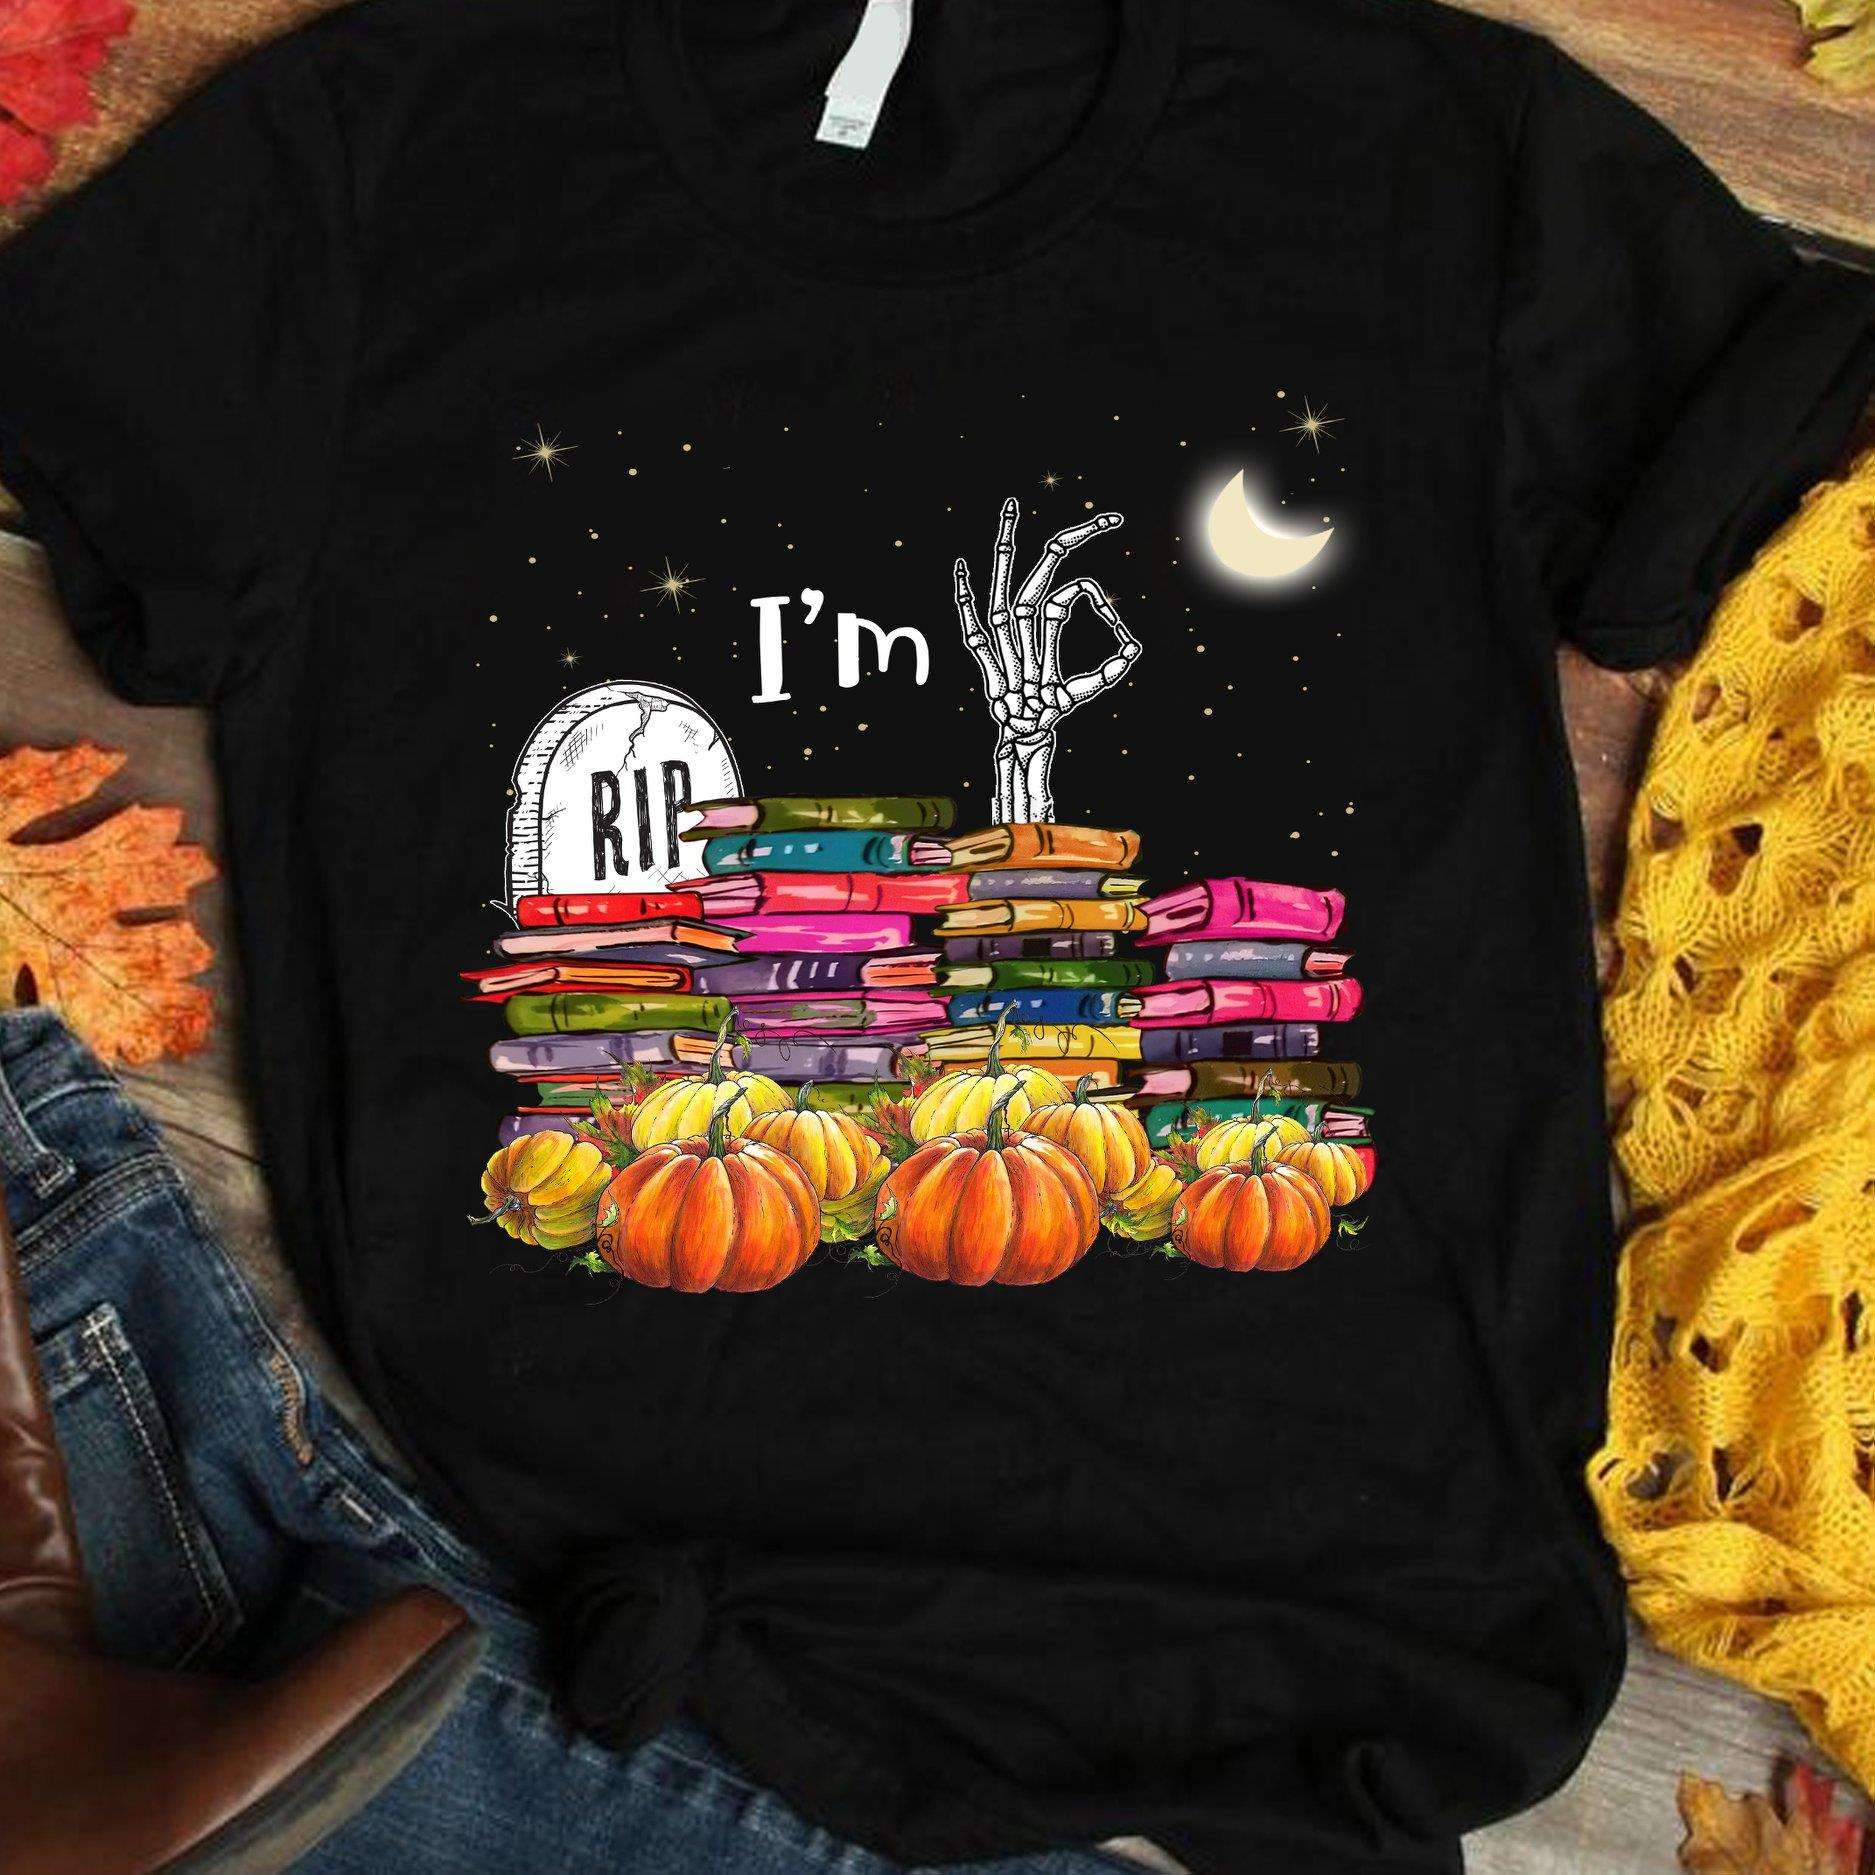 Books and pumpkins - Halloween shirt for bookaholic, skull love reading books